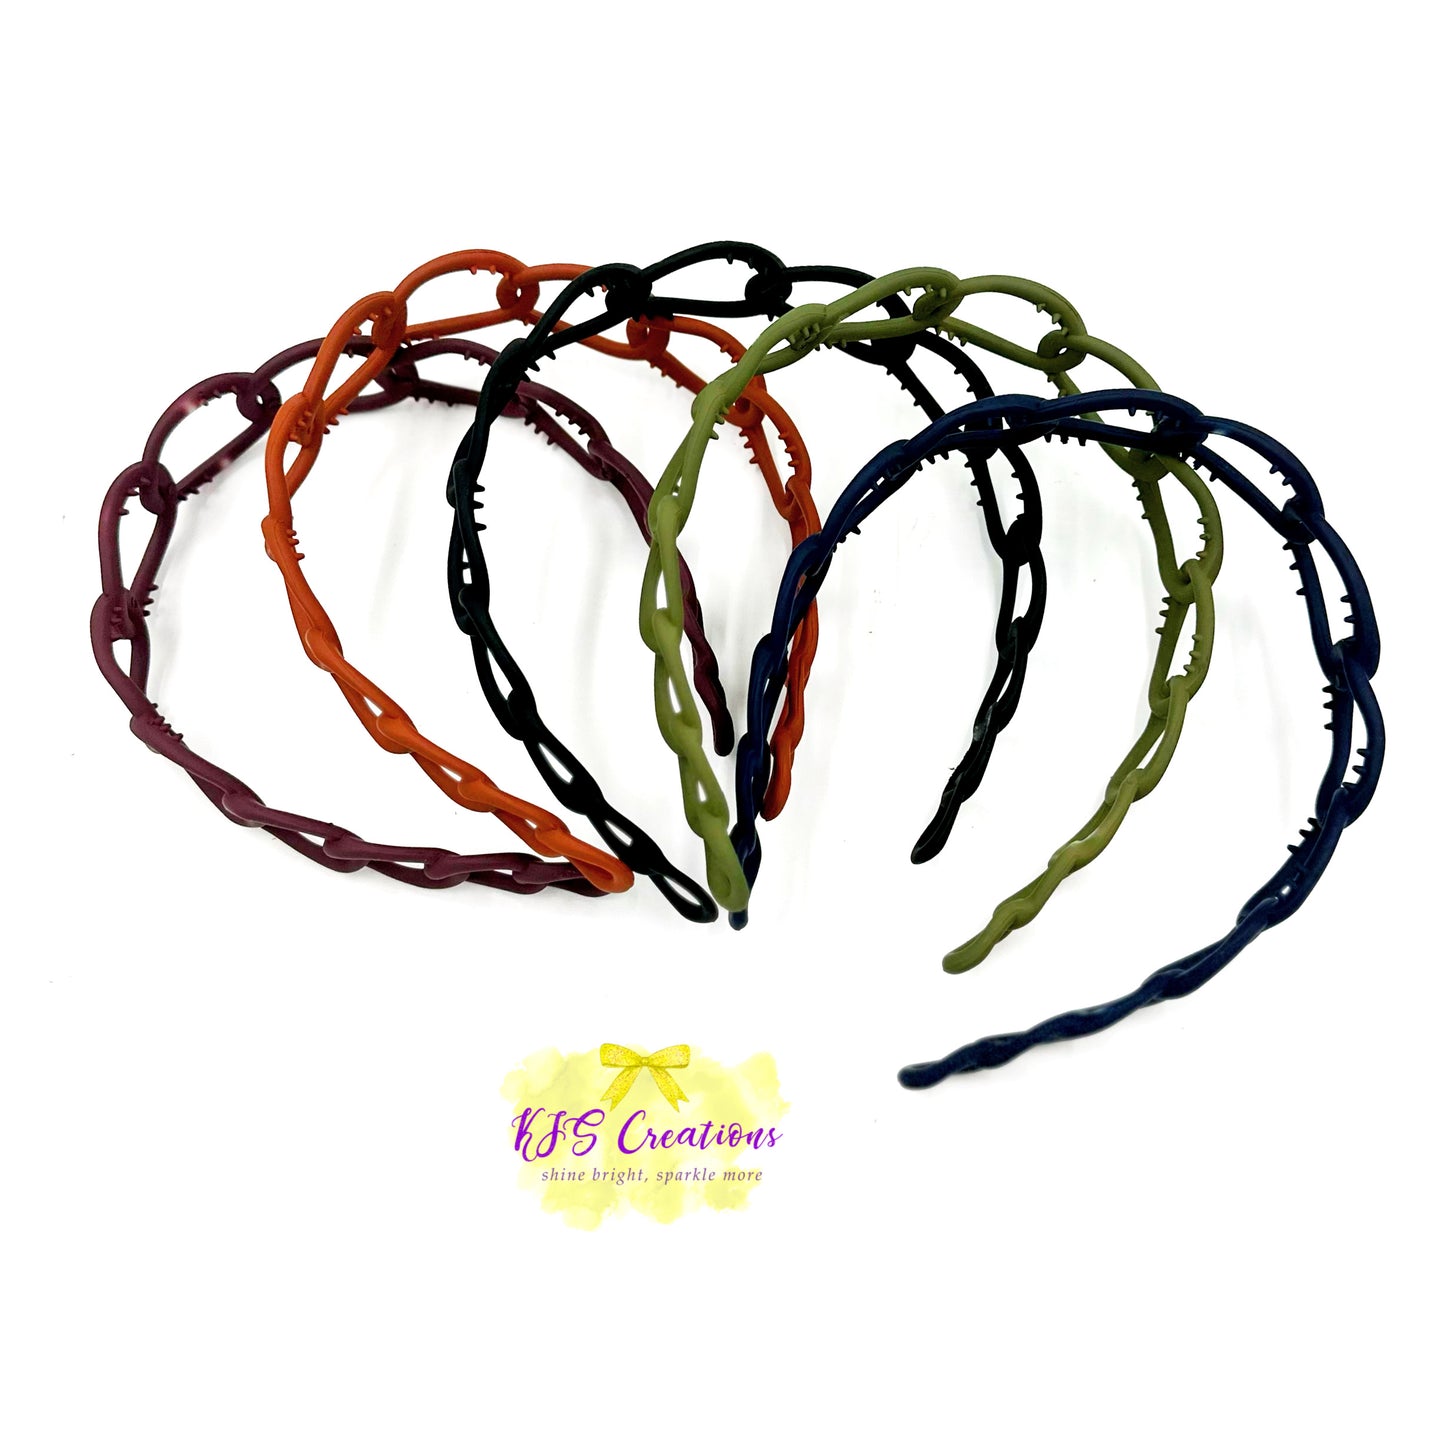 Chain link headbands